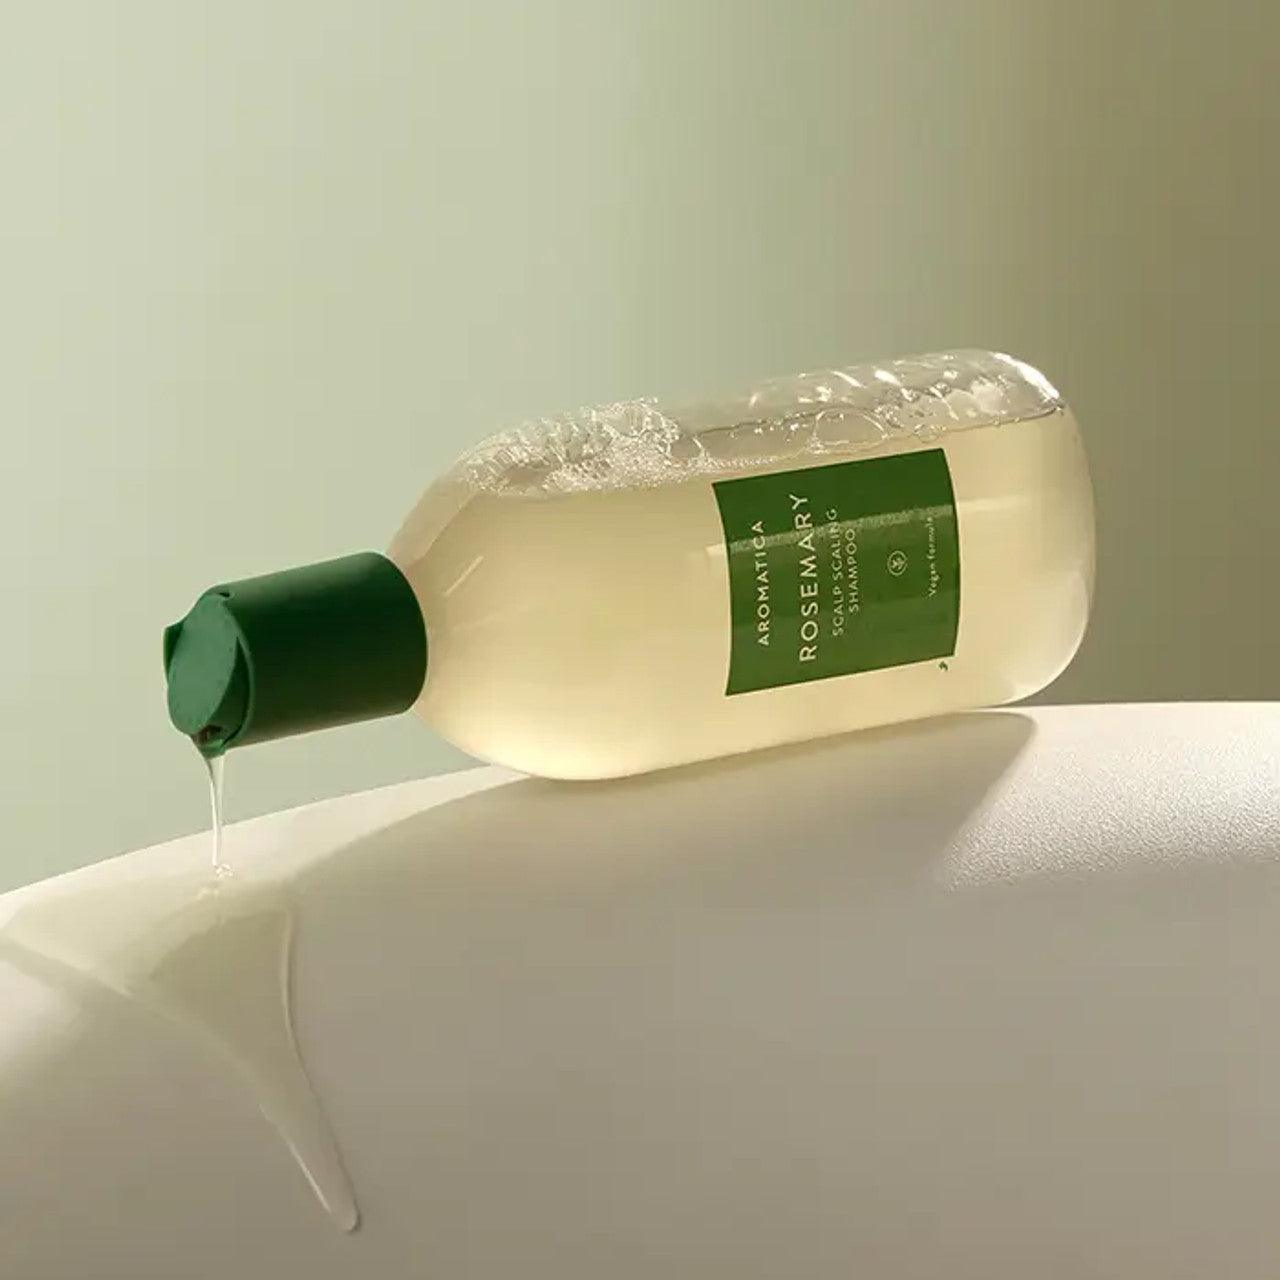 Rosemary Scalp Scaling Shampoo - 180 ml/ 400 ml